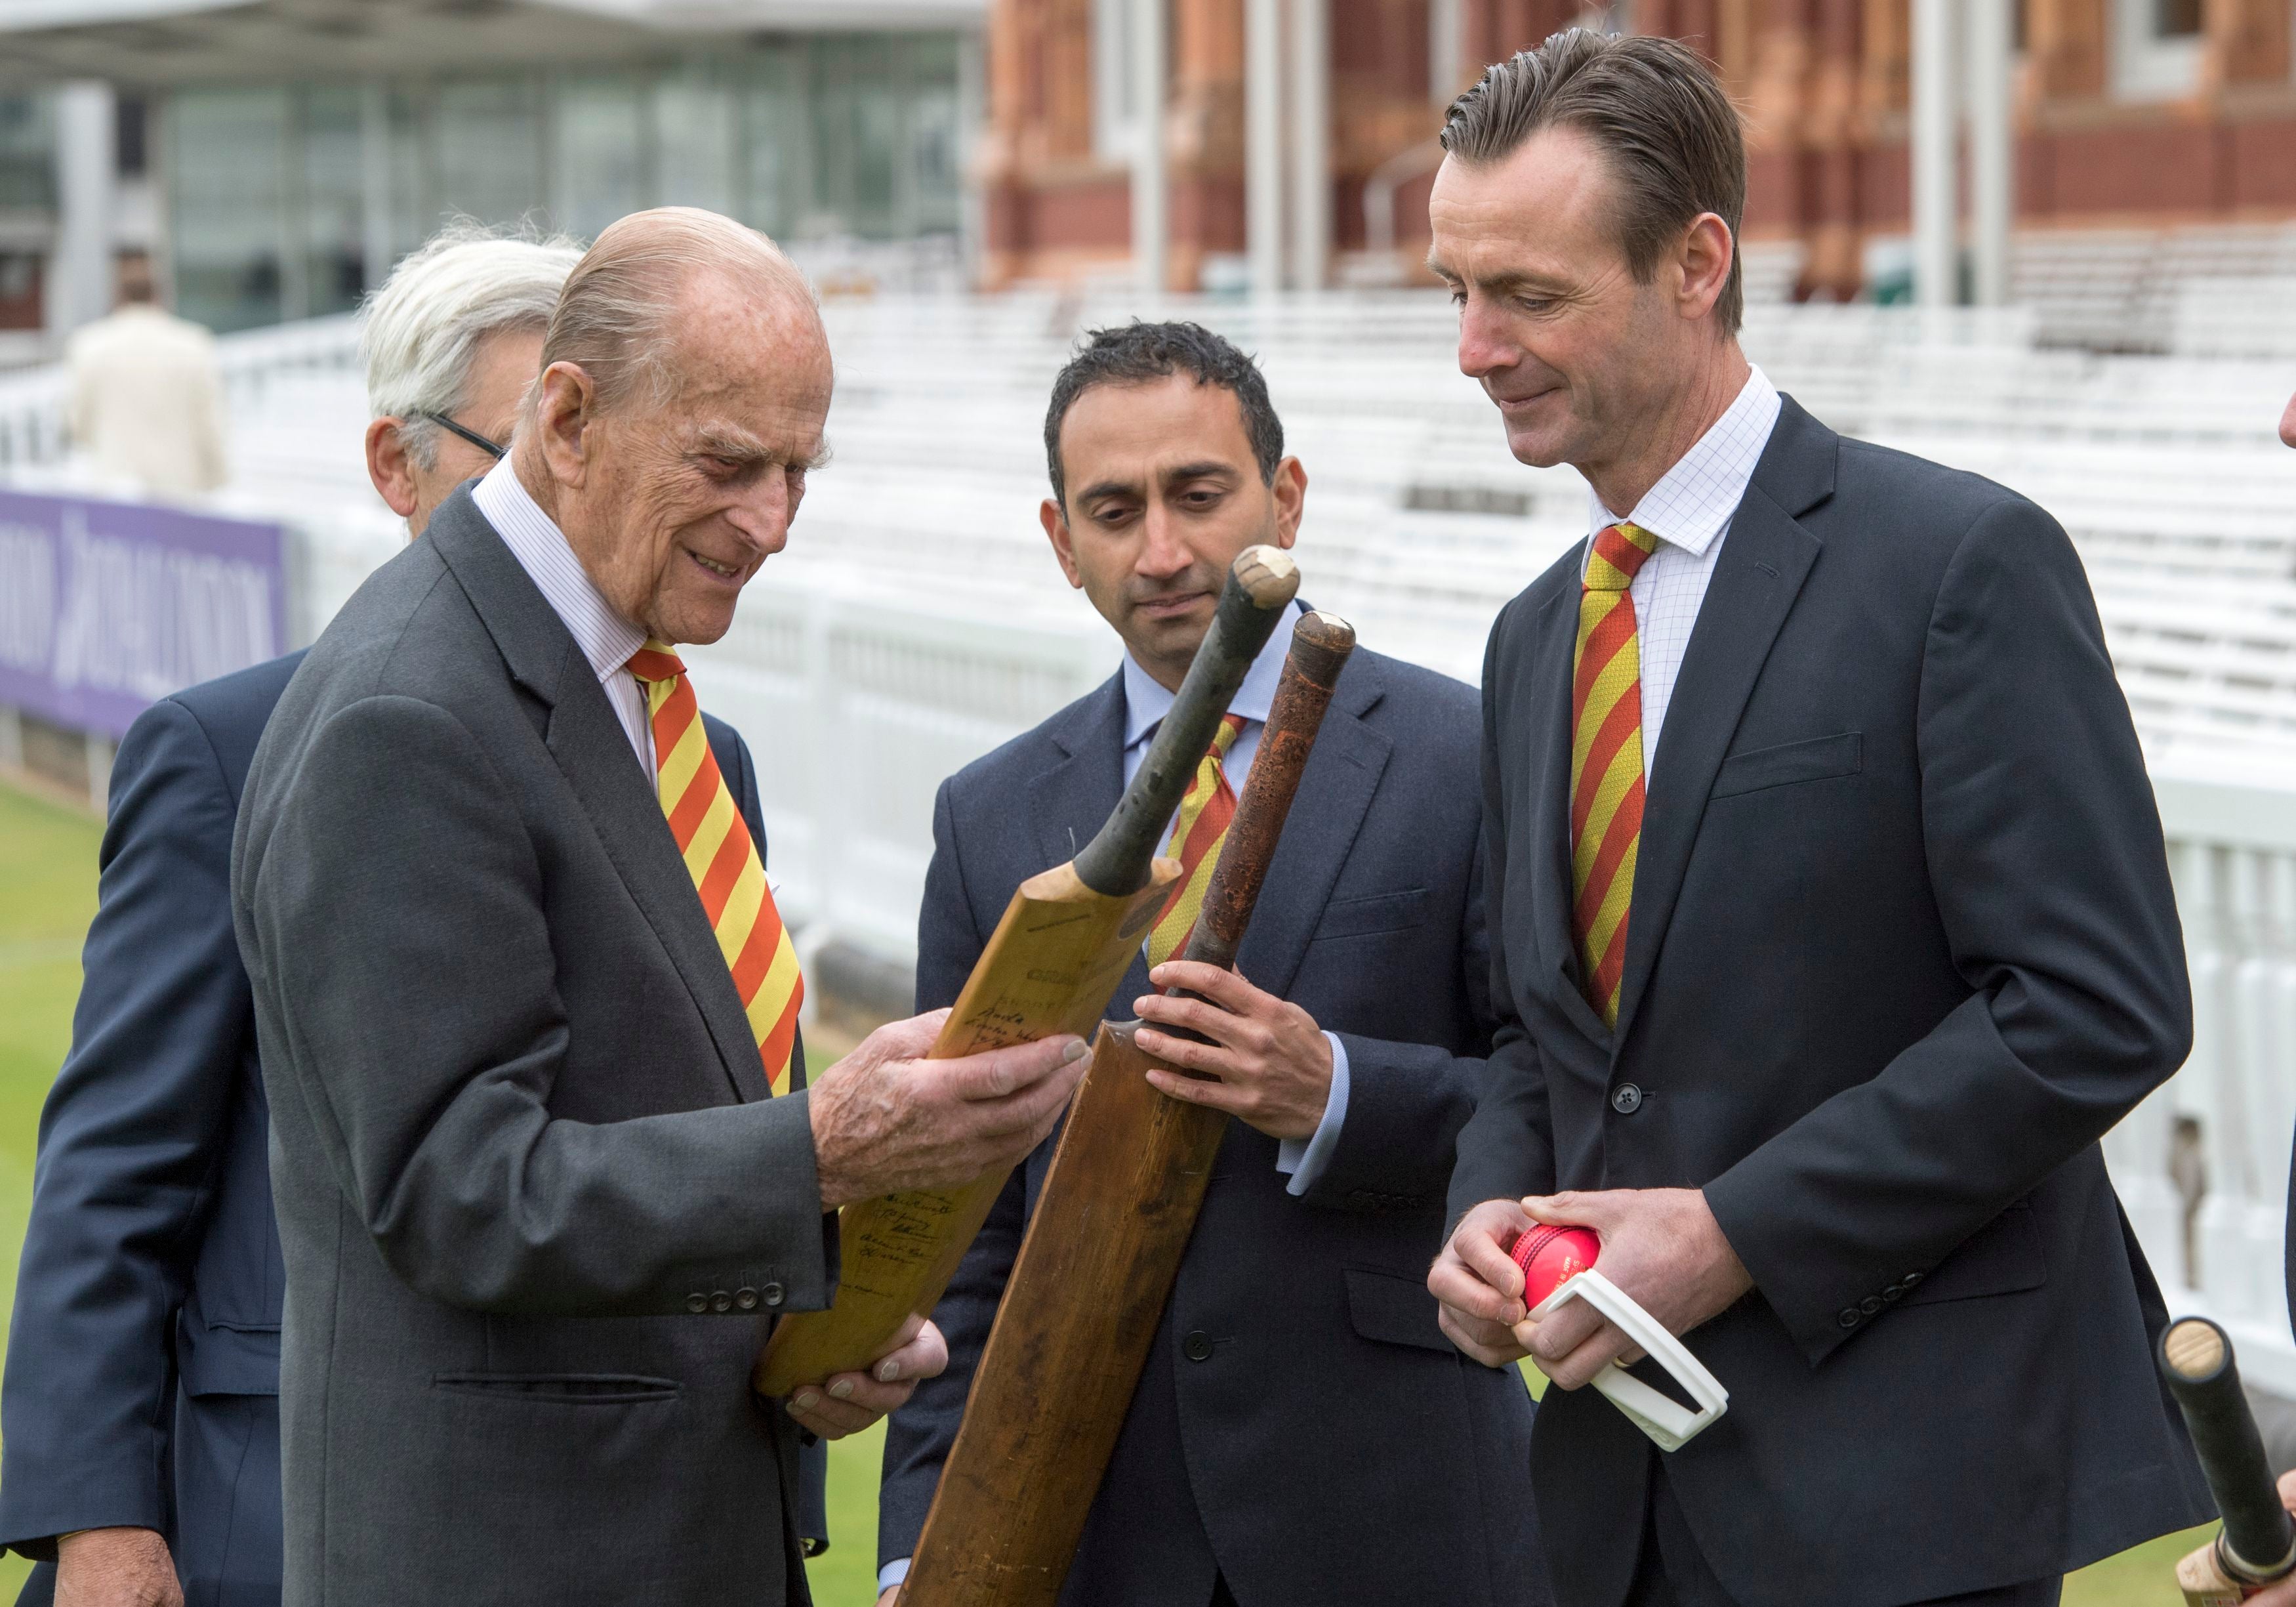 John Stephenson, right, is leaving Marylebone Cricket Club